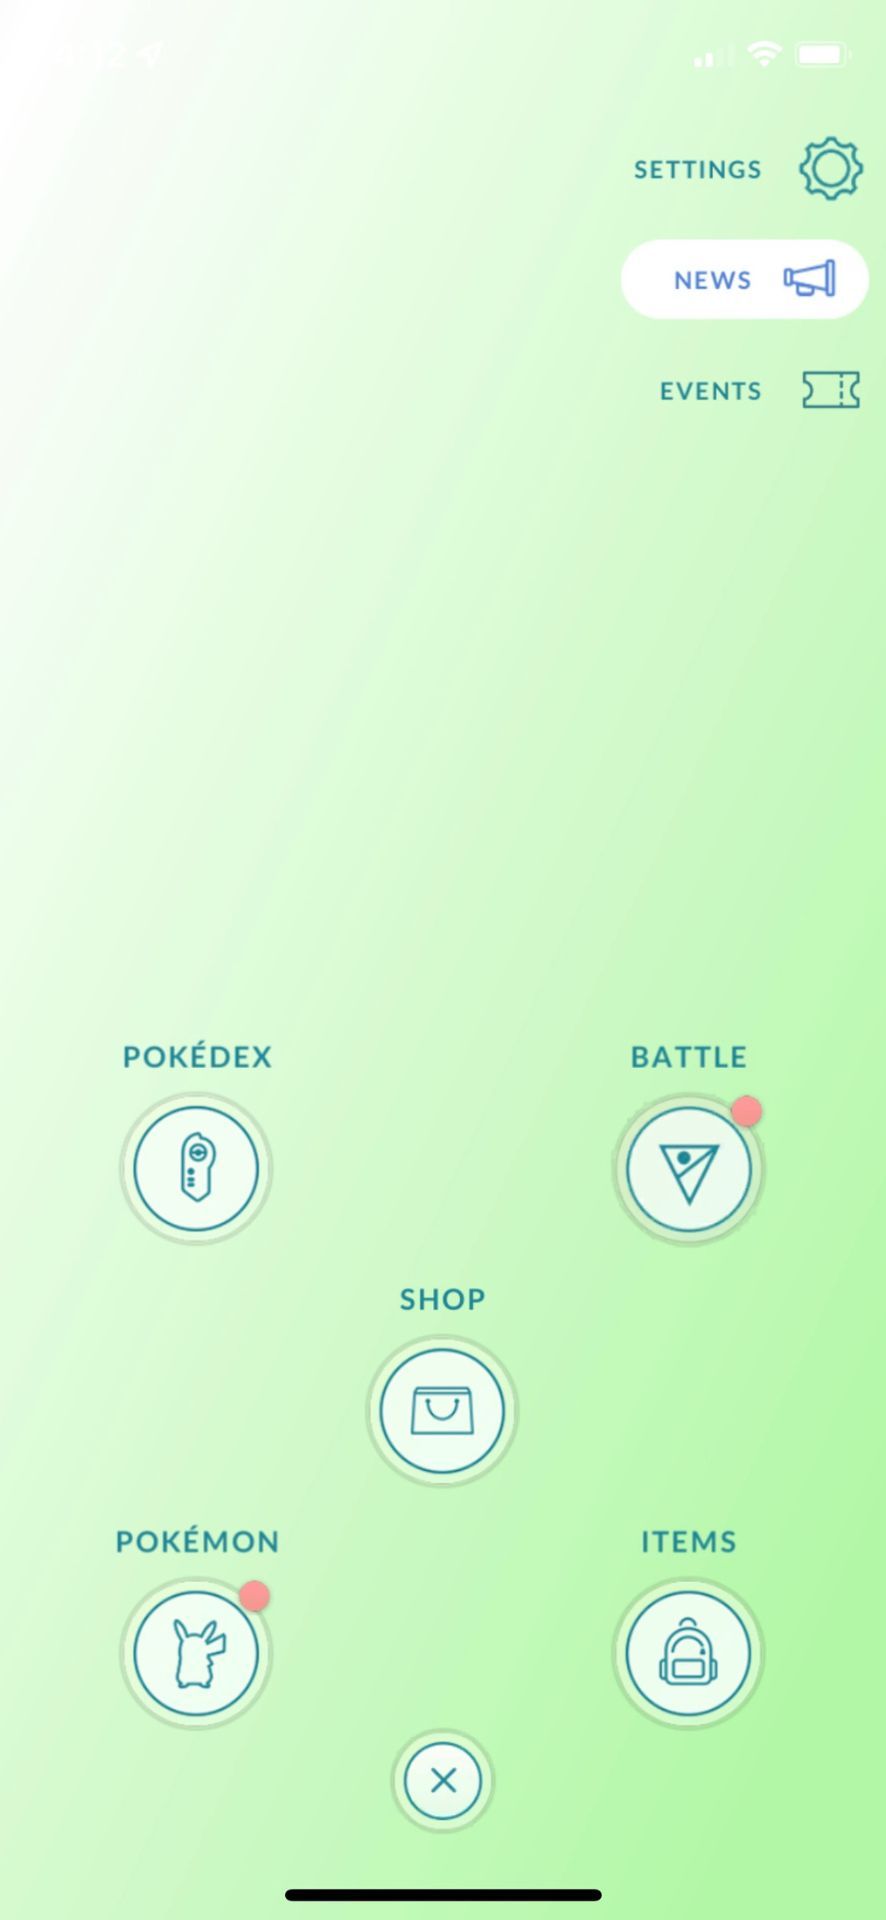 Connect Poke Ball Plus to Pokémon Go press gear button in top right corner